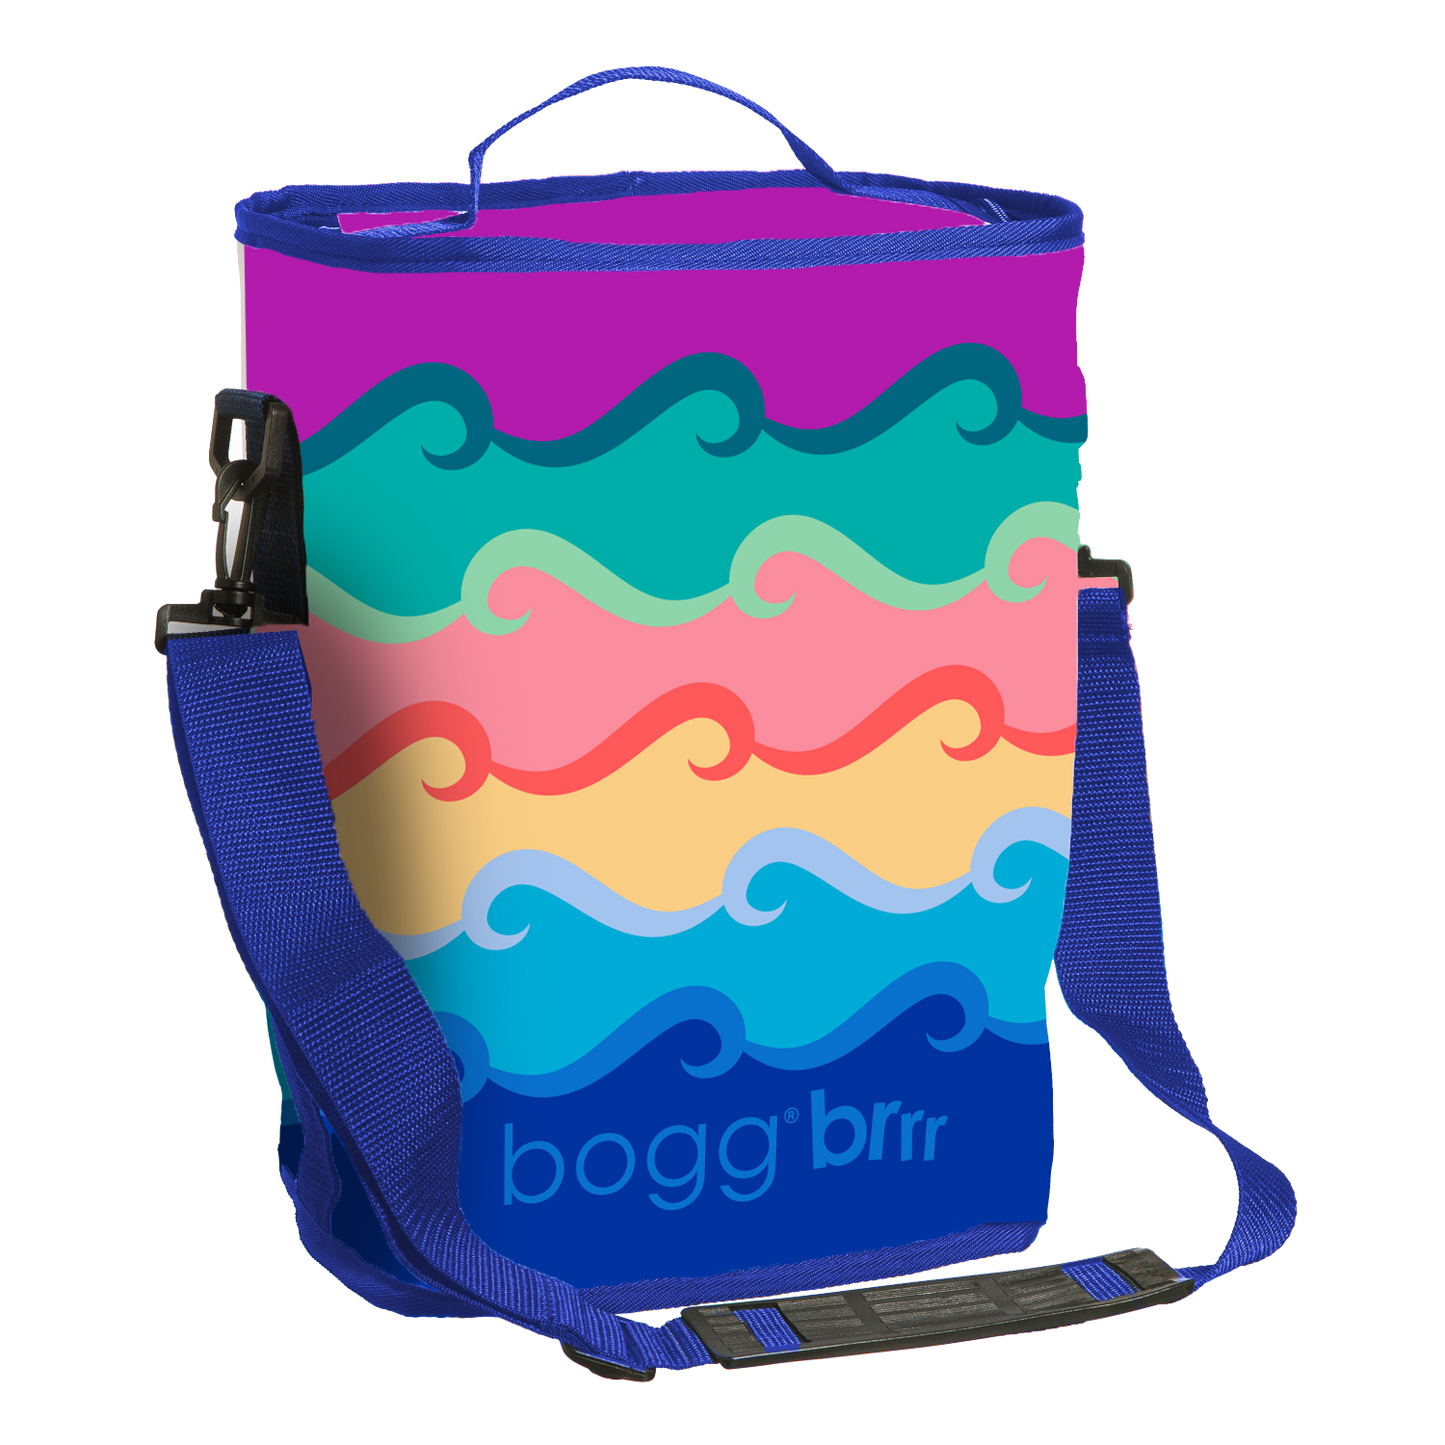 Bogg® Brrr and a Half Cooler Insert - Good Vibes